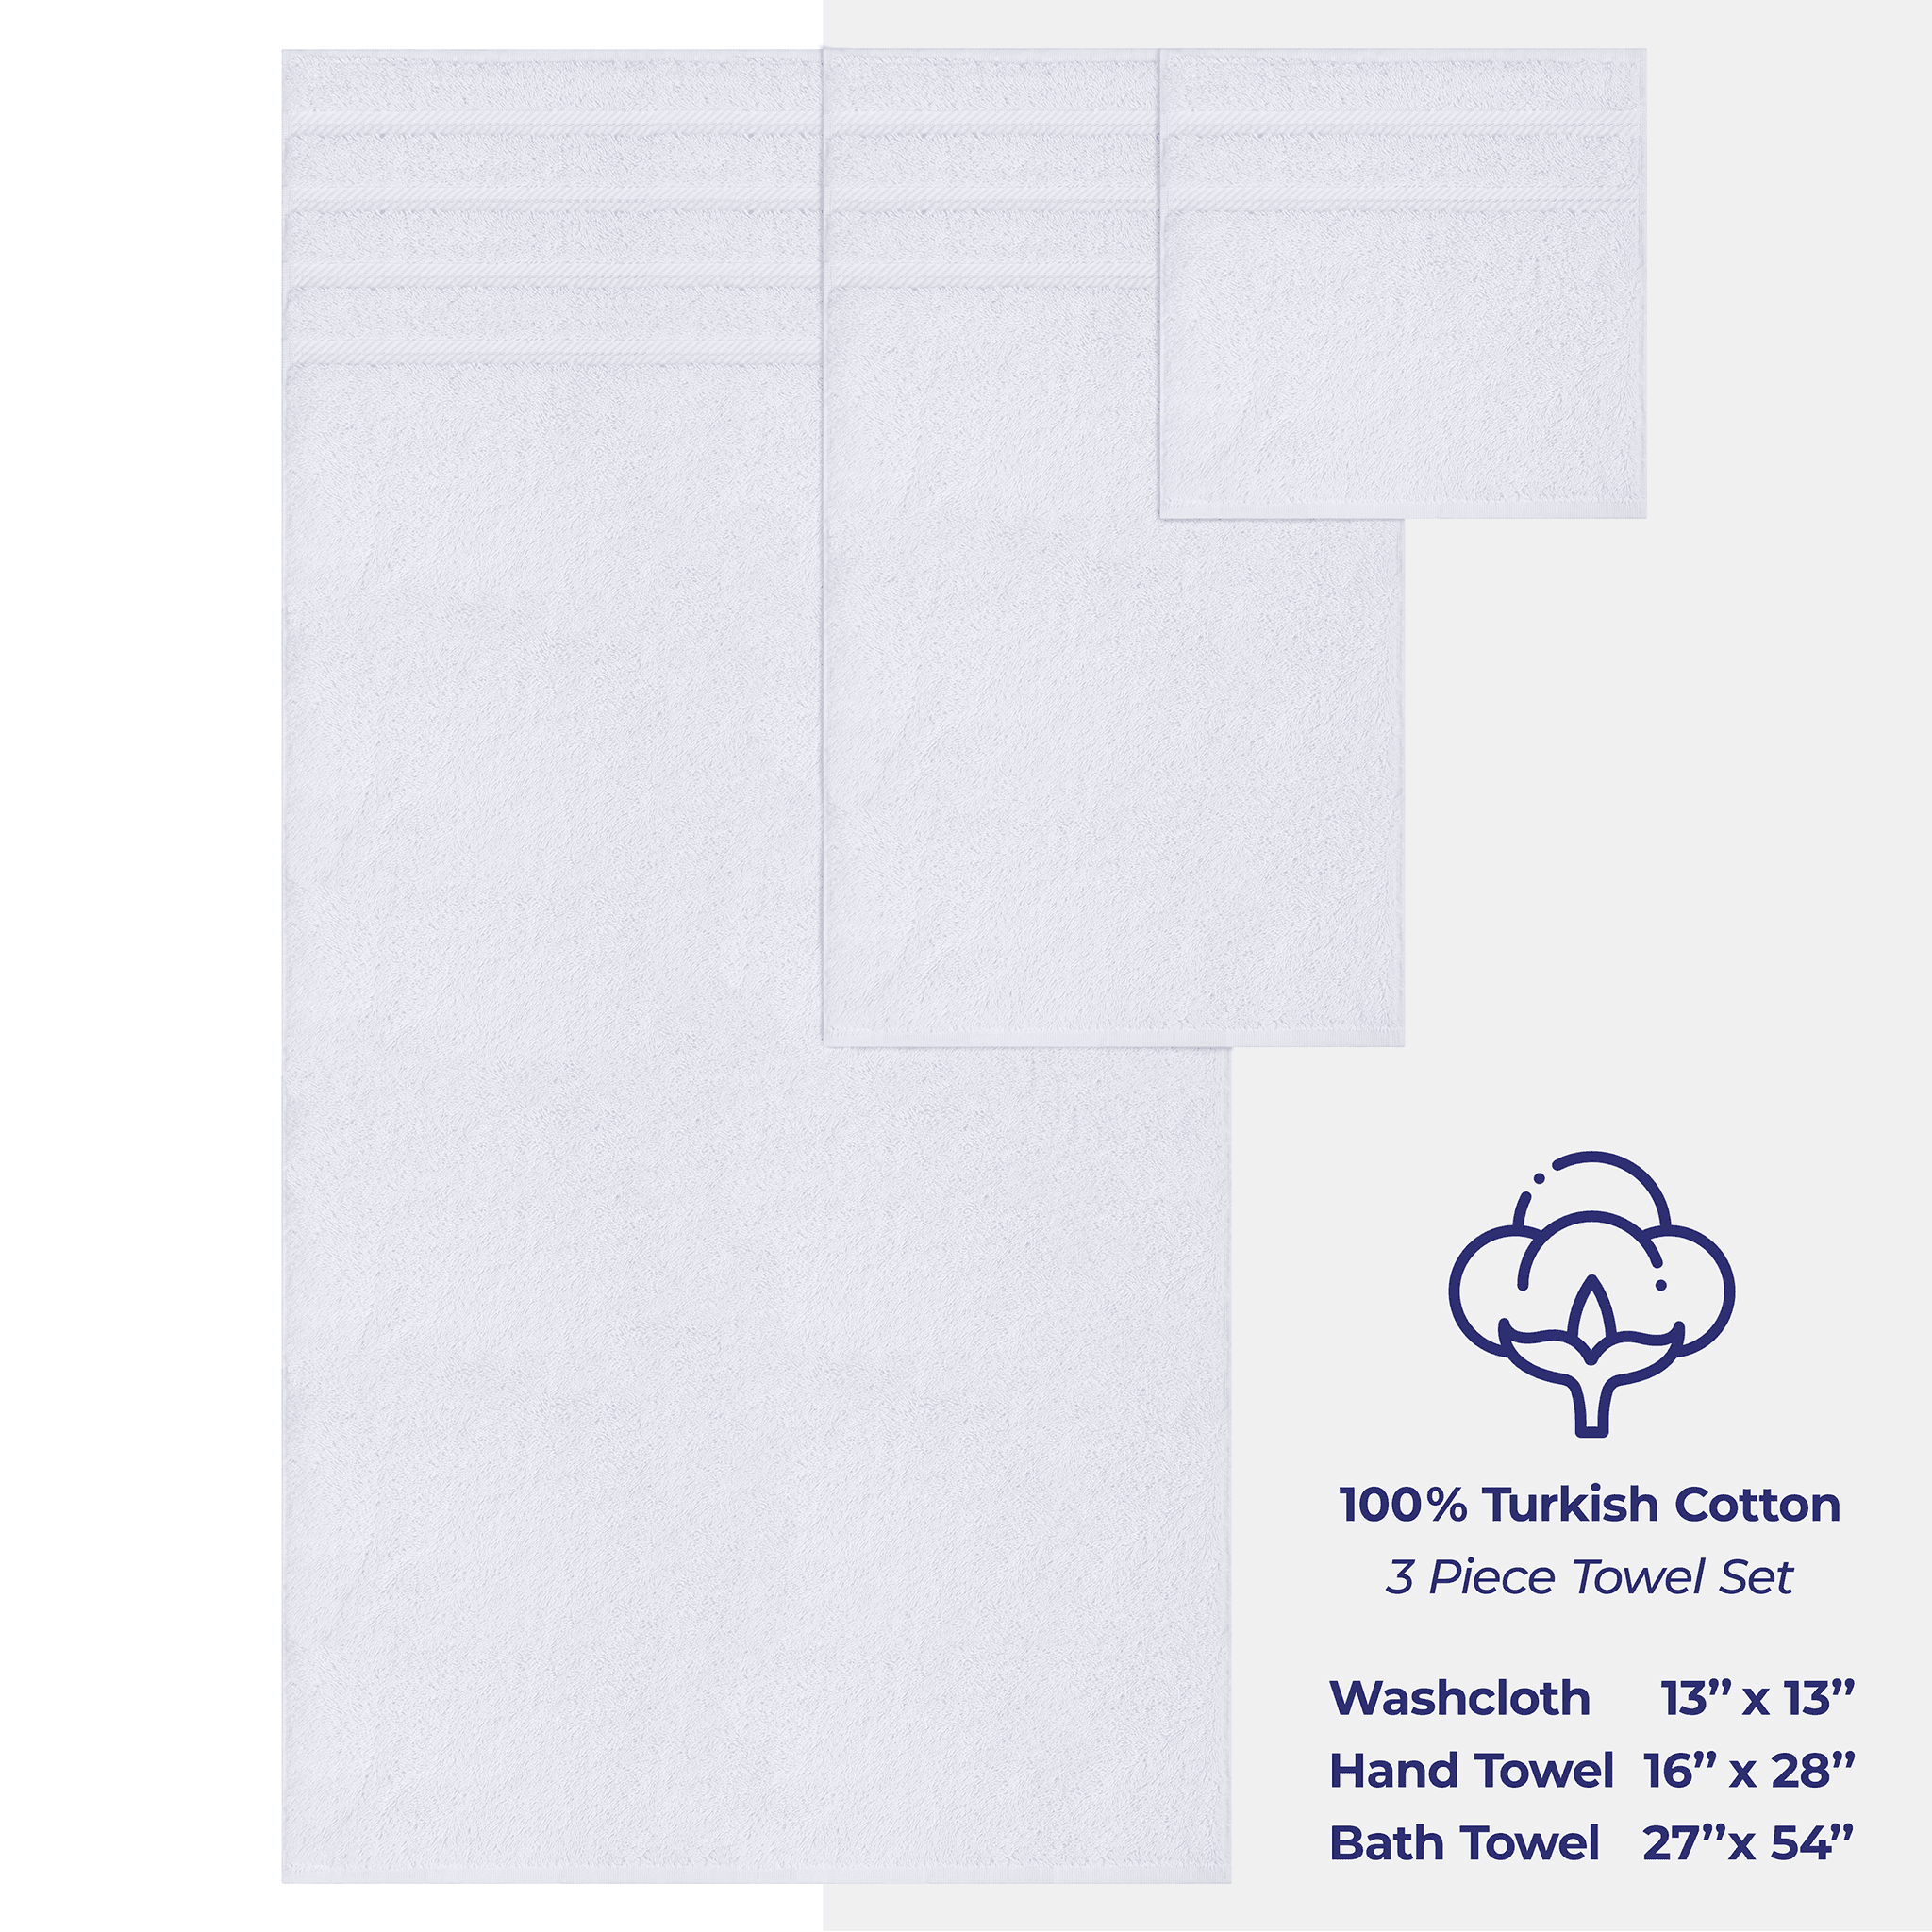 American Soft Linen - 3 Piece Turkish Cotton Towel Set - White - 4